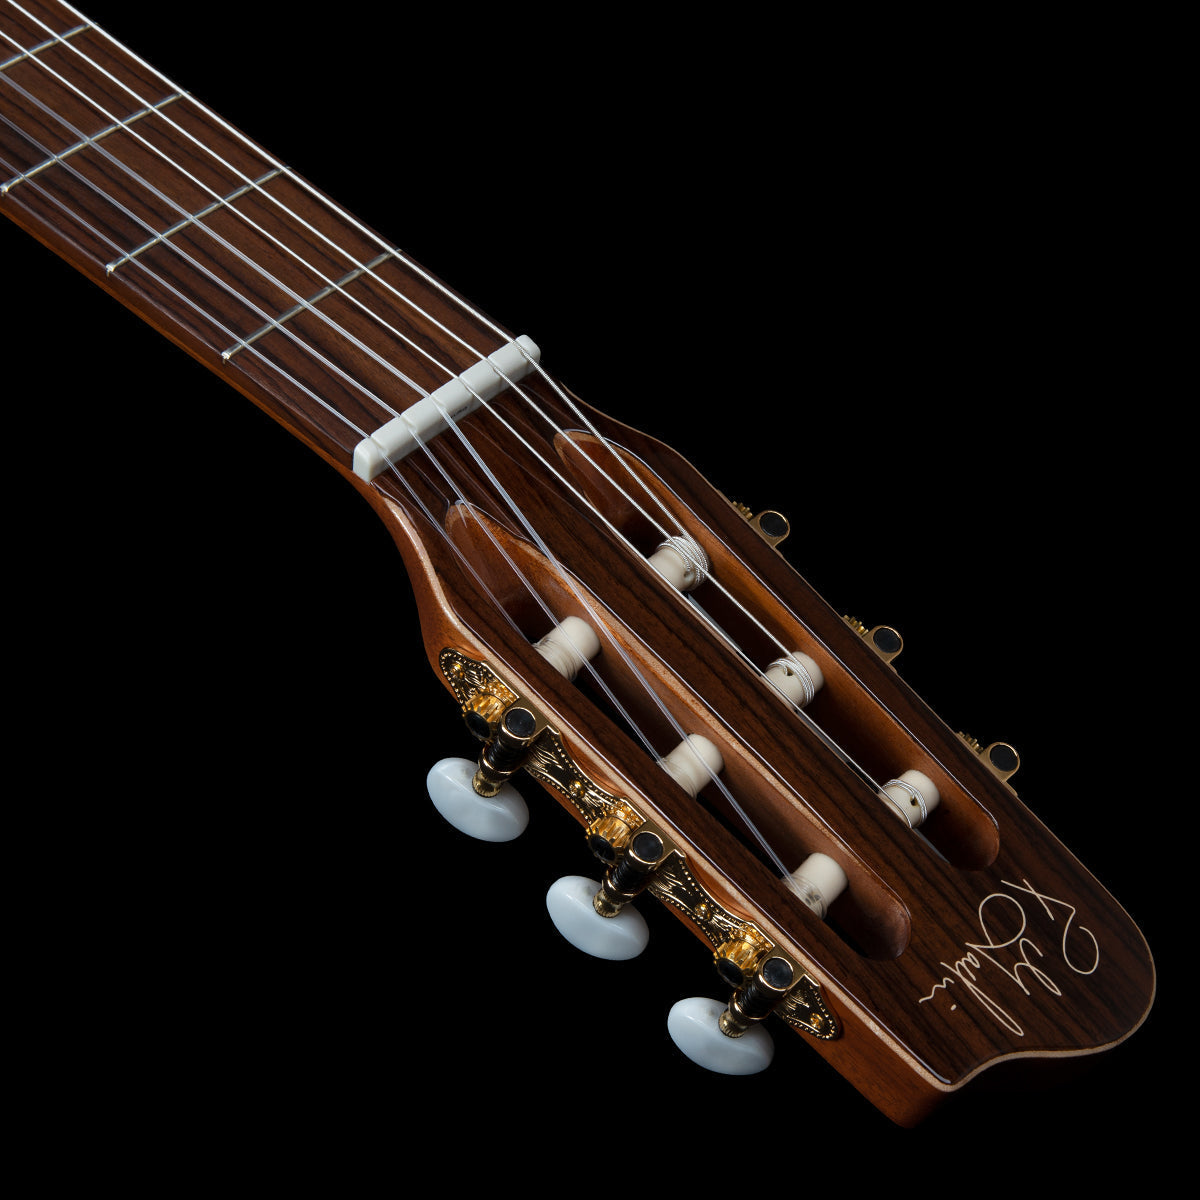 Godin Concert Clasica II Nylon String Electro Guitar,  for sale at Richards Guitars.